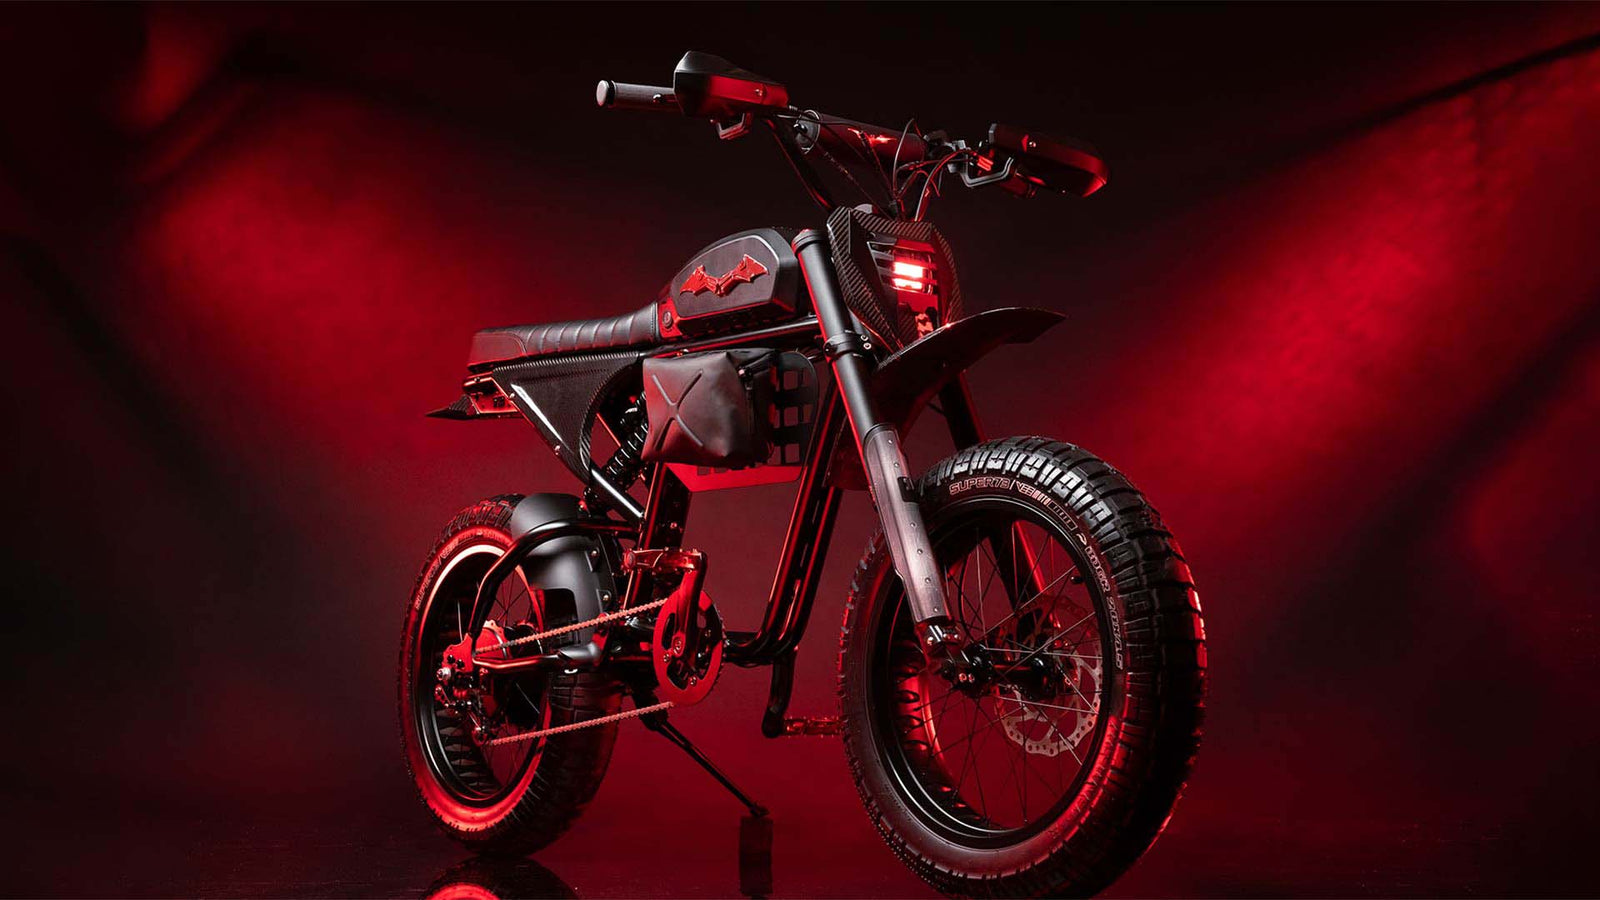 HALO custom batman bike in red lighting